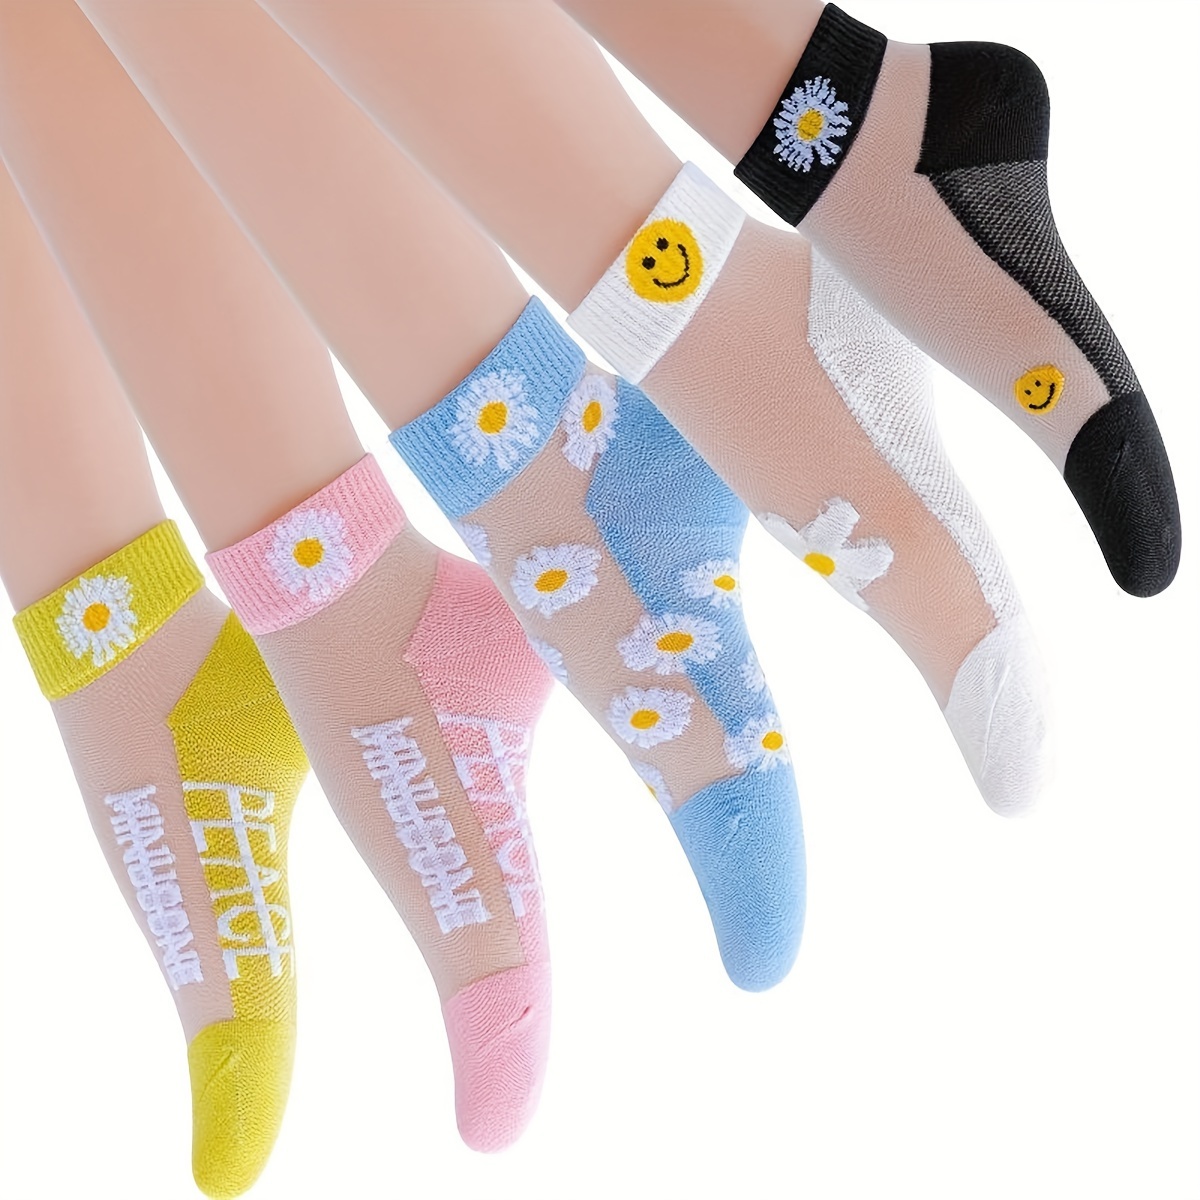 

10 Pairs Of Summer Daisy Ice Silk Short Thin Socks, Comfortable Cotton Bottom Breathable Cute Socks, Soft & Lightweight All-match Low Cut Ankle Socks, Women's Stockings & Hosiery